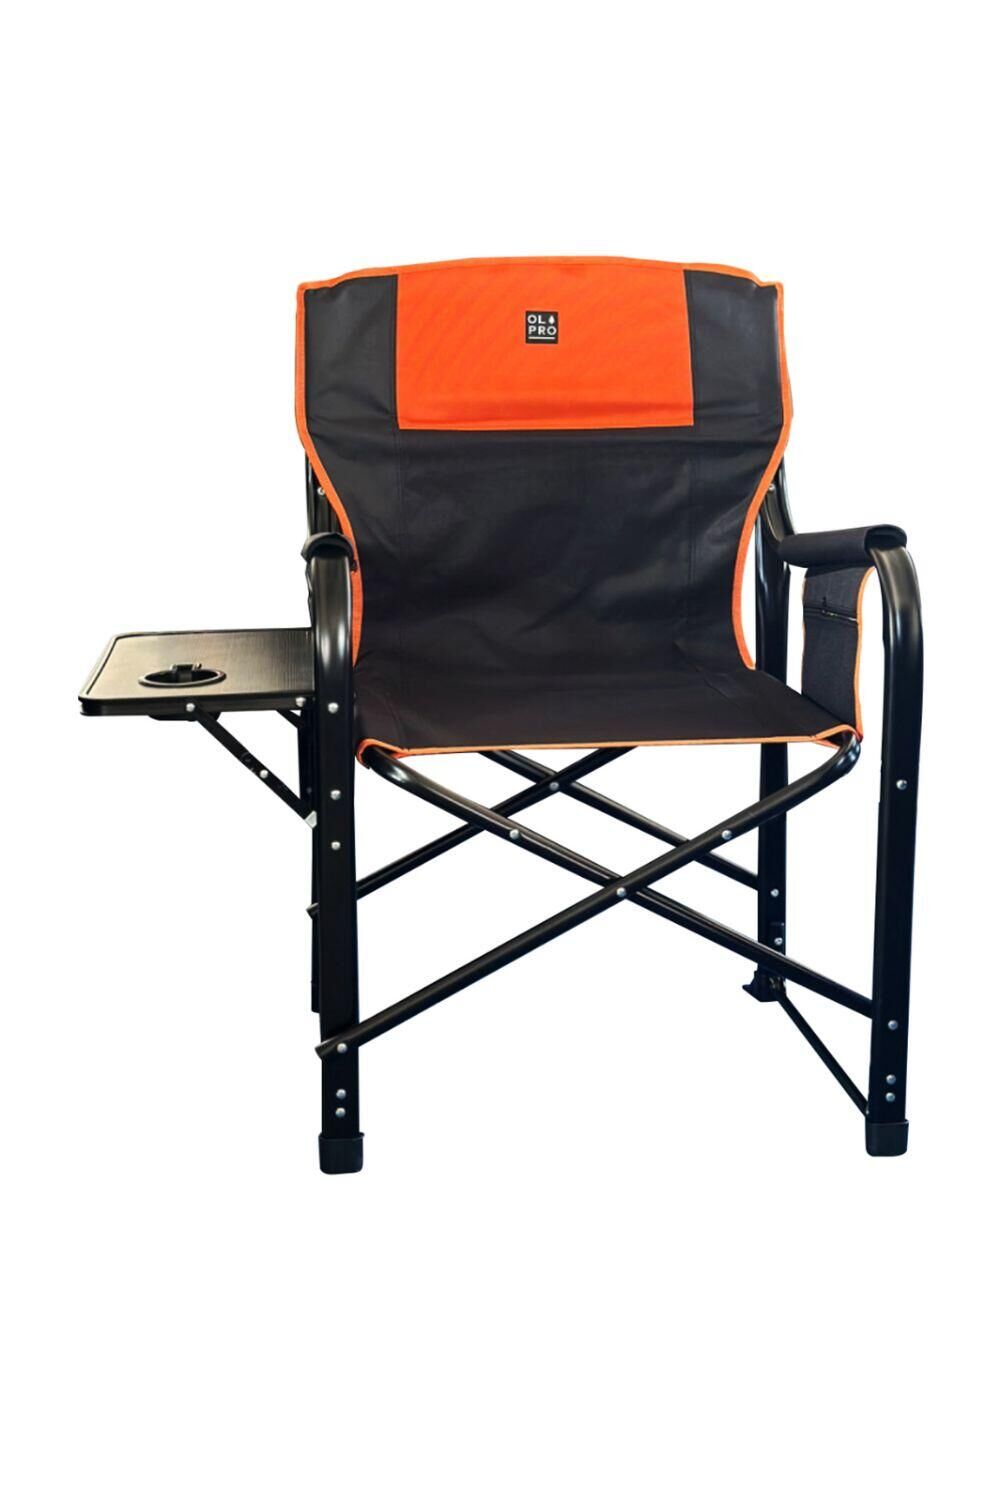 OLPRO OLPRO Directors Chair - Black & Orange